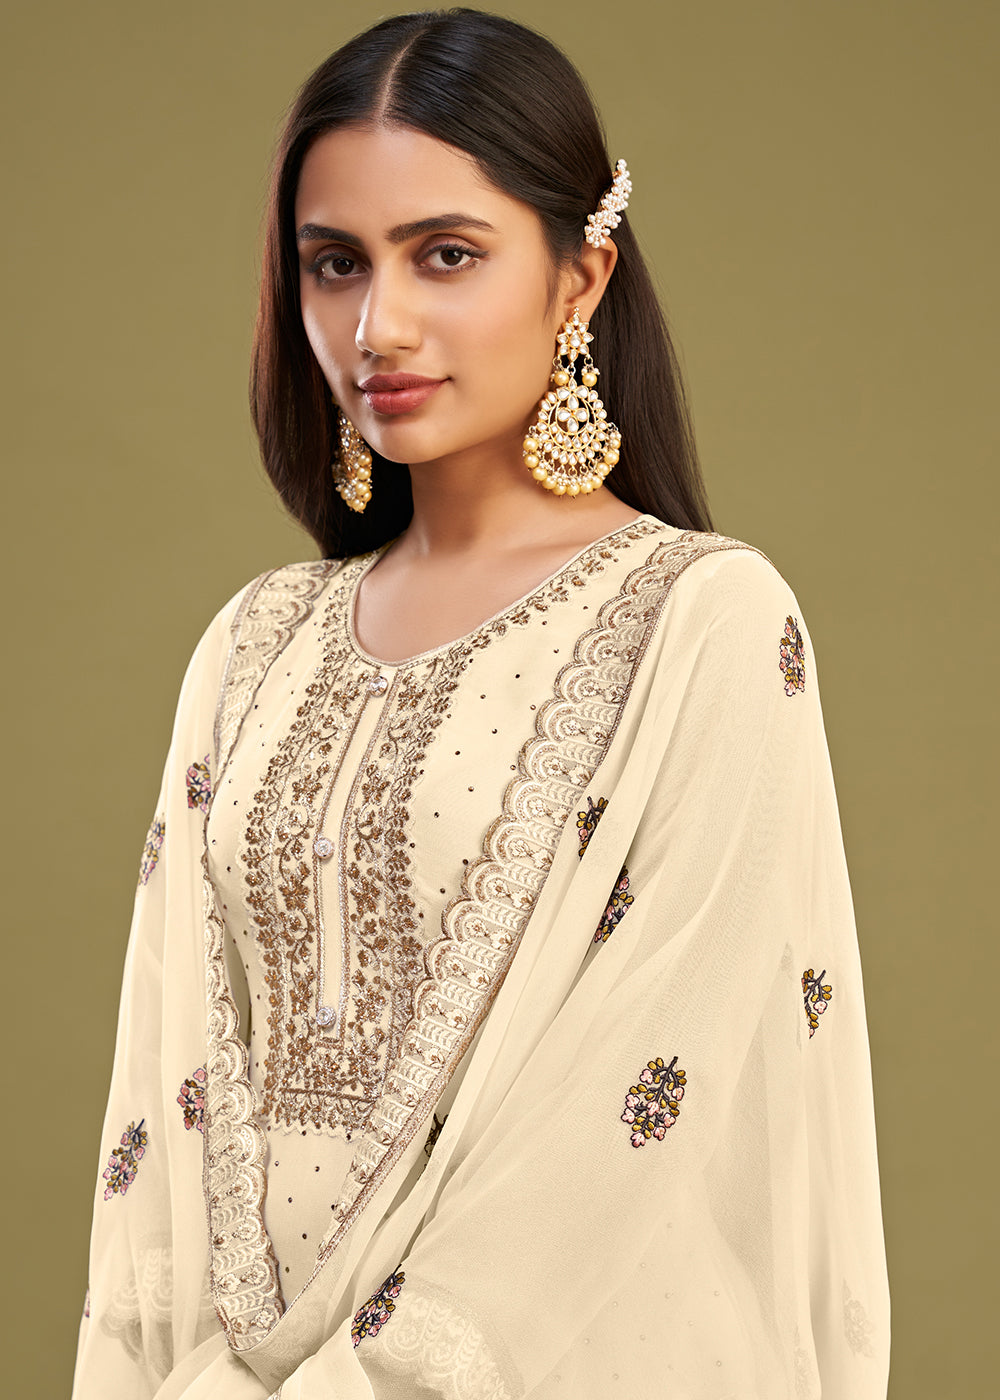 Buy Now Off White Swarovski Work & Embroidered Eid Wear Salwar Suit Online in USA, UK, Canada, Germany, Australia & Worldwide at Empress Clothing.